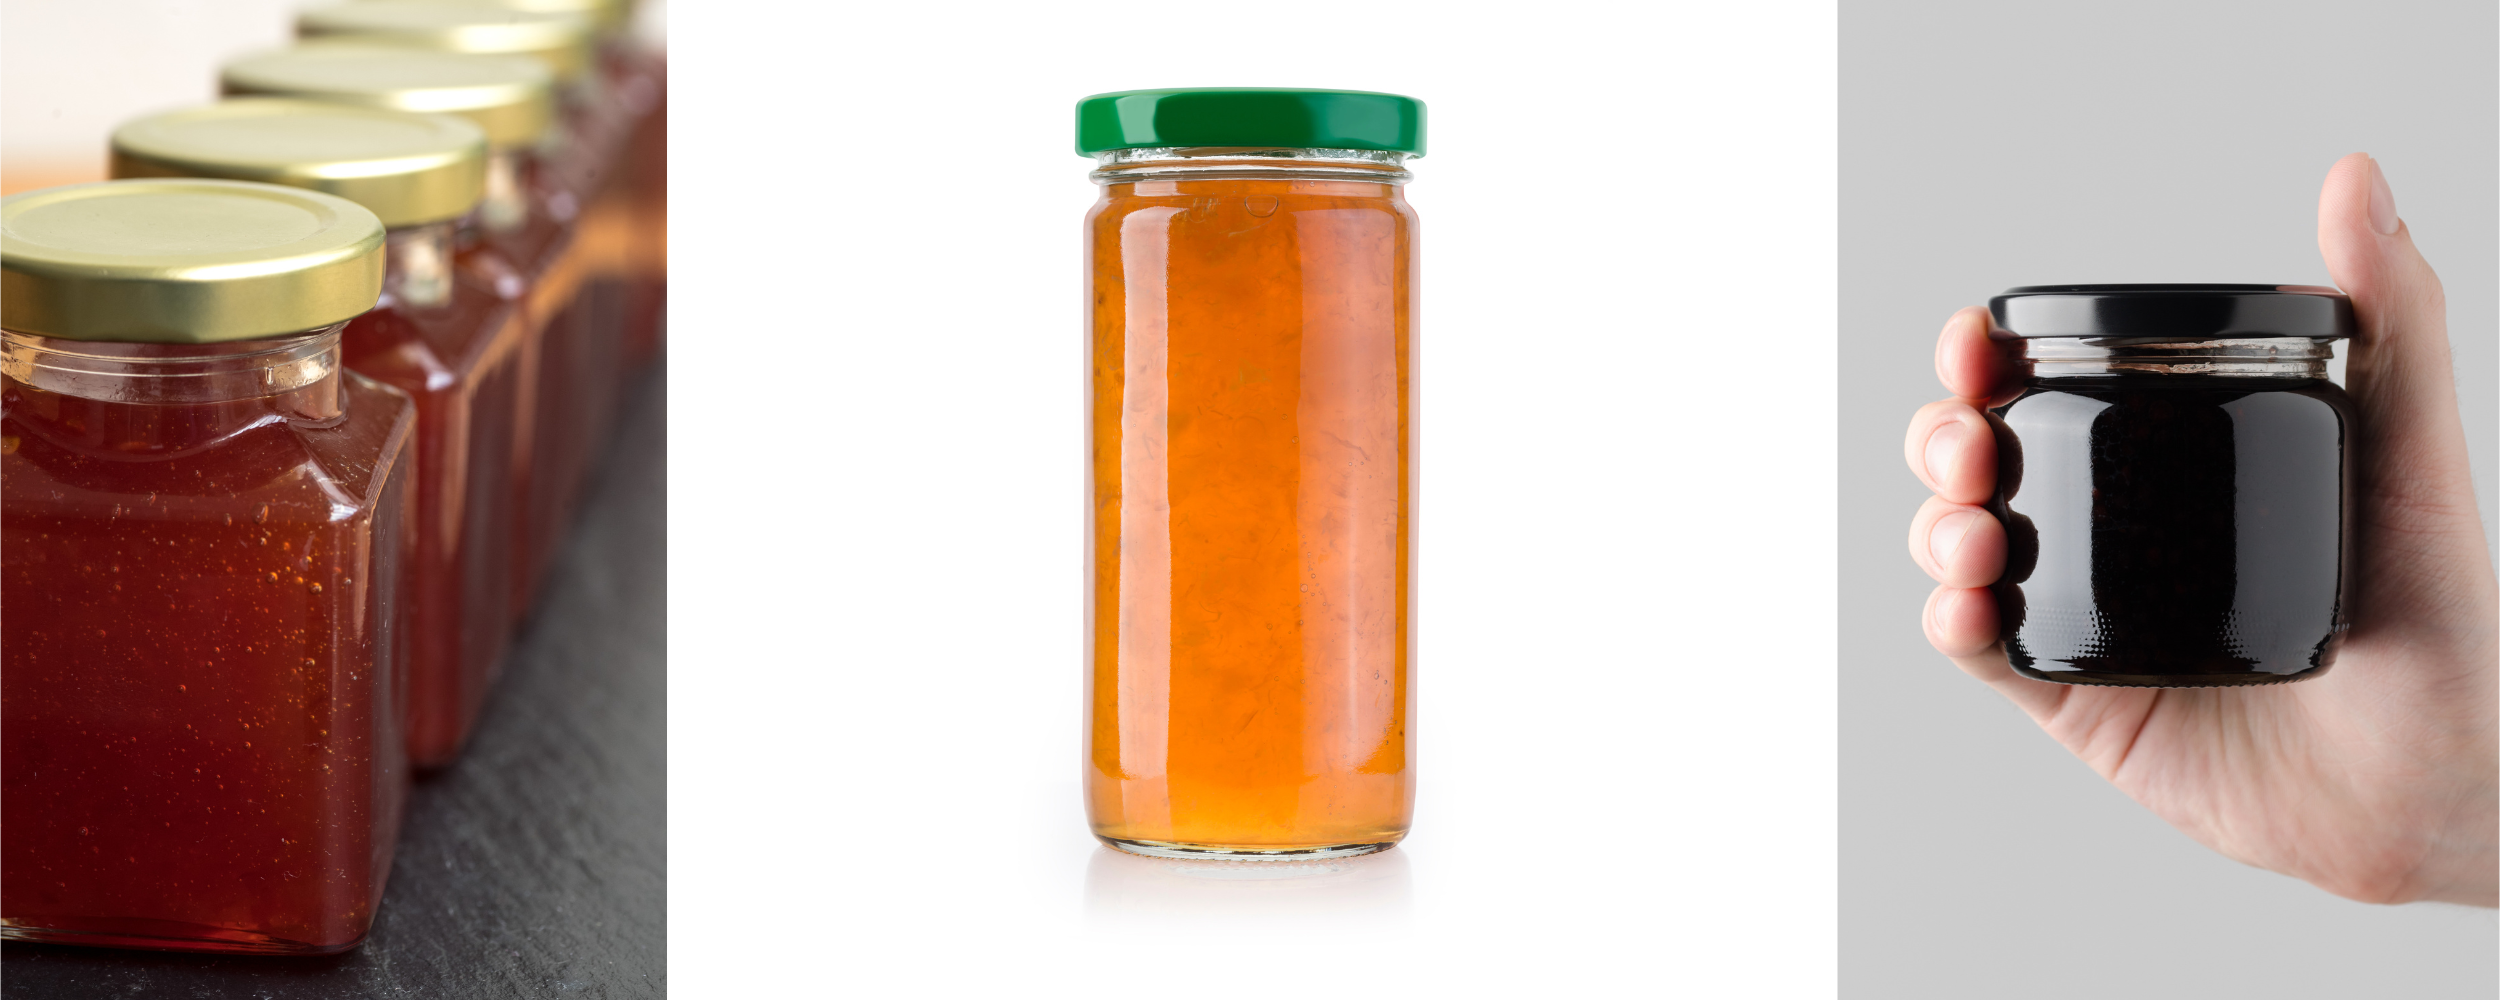 Different jars of jam